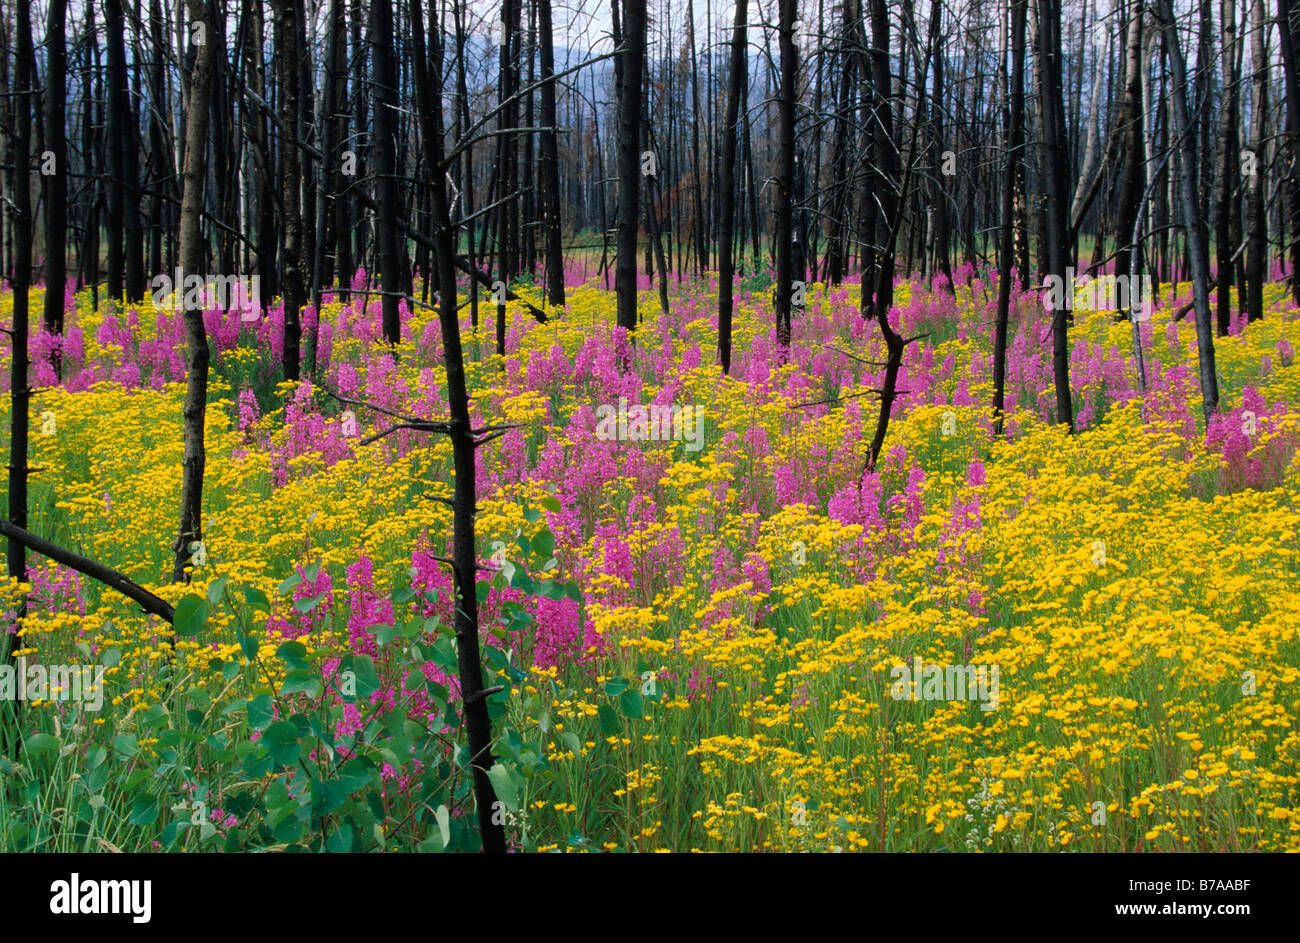 Fireweed (Epilobium angustifolium) and Ragwort (Senecio fuchsil) in a burnt down forest, Yukon, Canada, North America Stock Photo